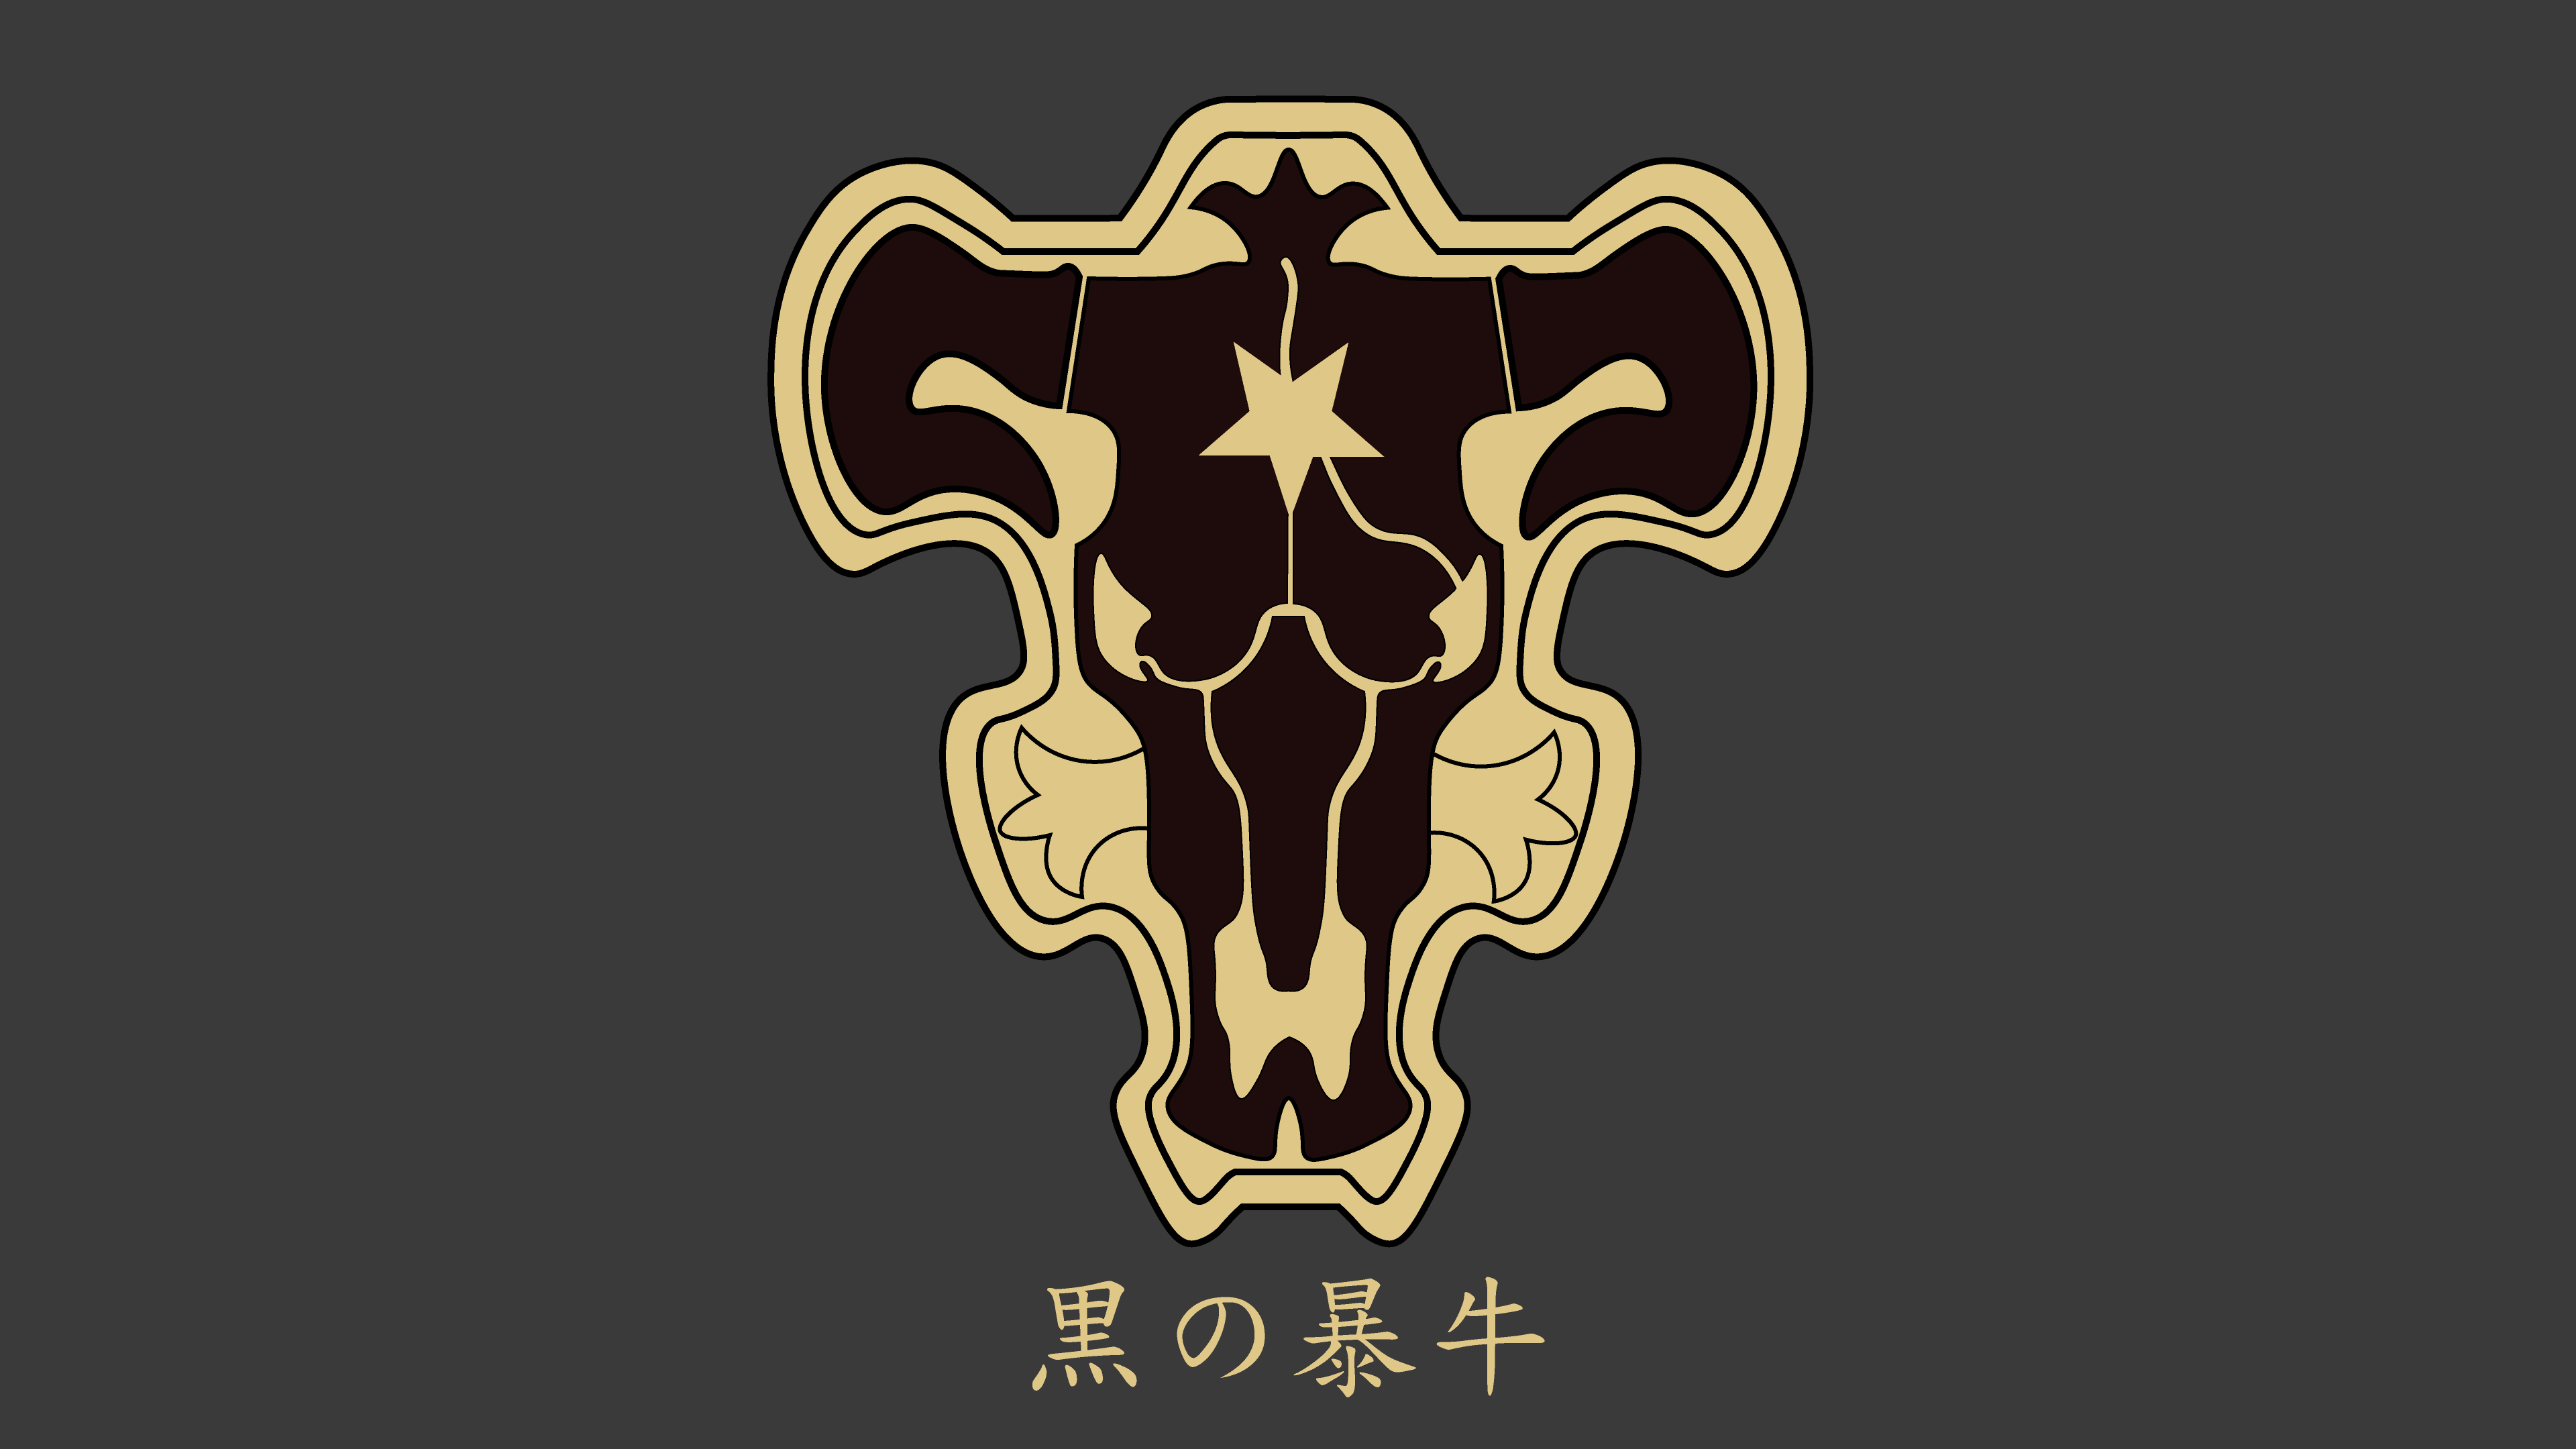 Black Clover Black Bull Anime Logo Minimalism Gray Japan Skull Bones Wallpaper:3840x2160